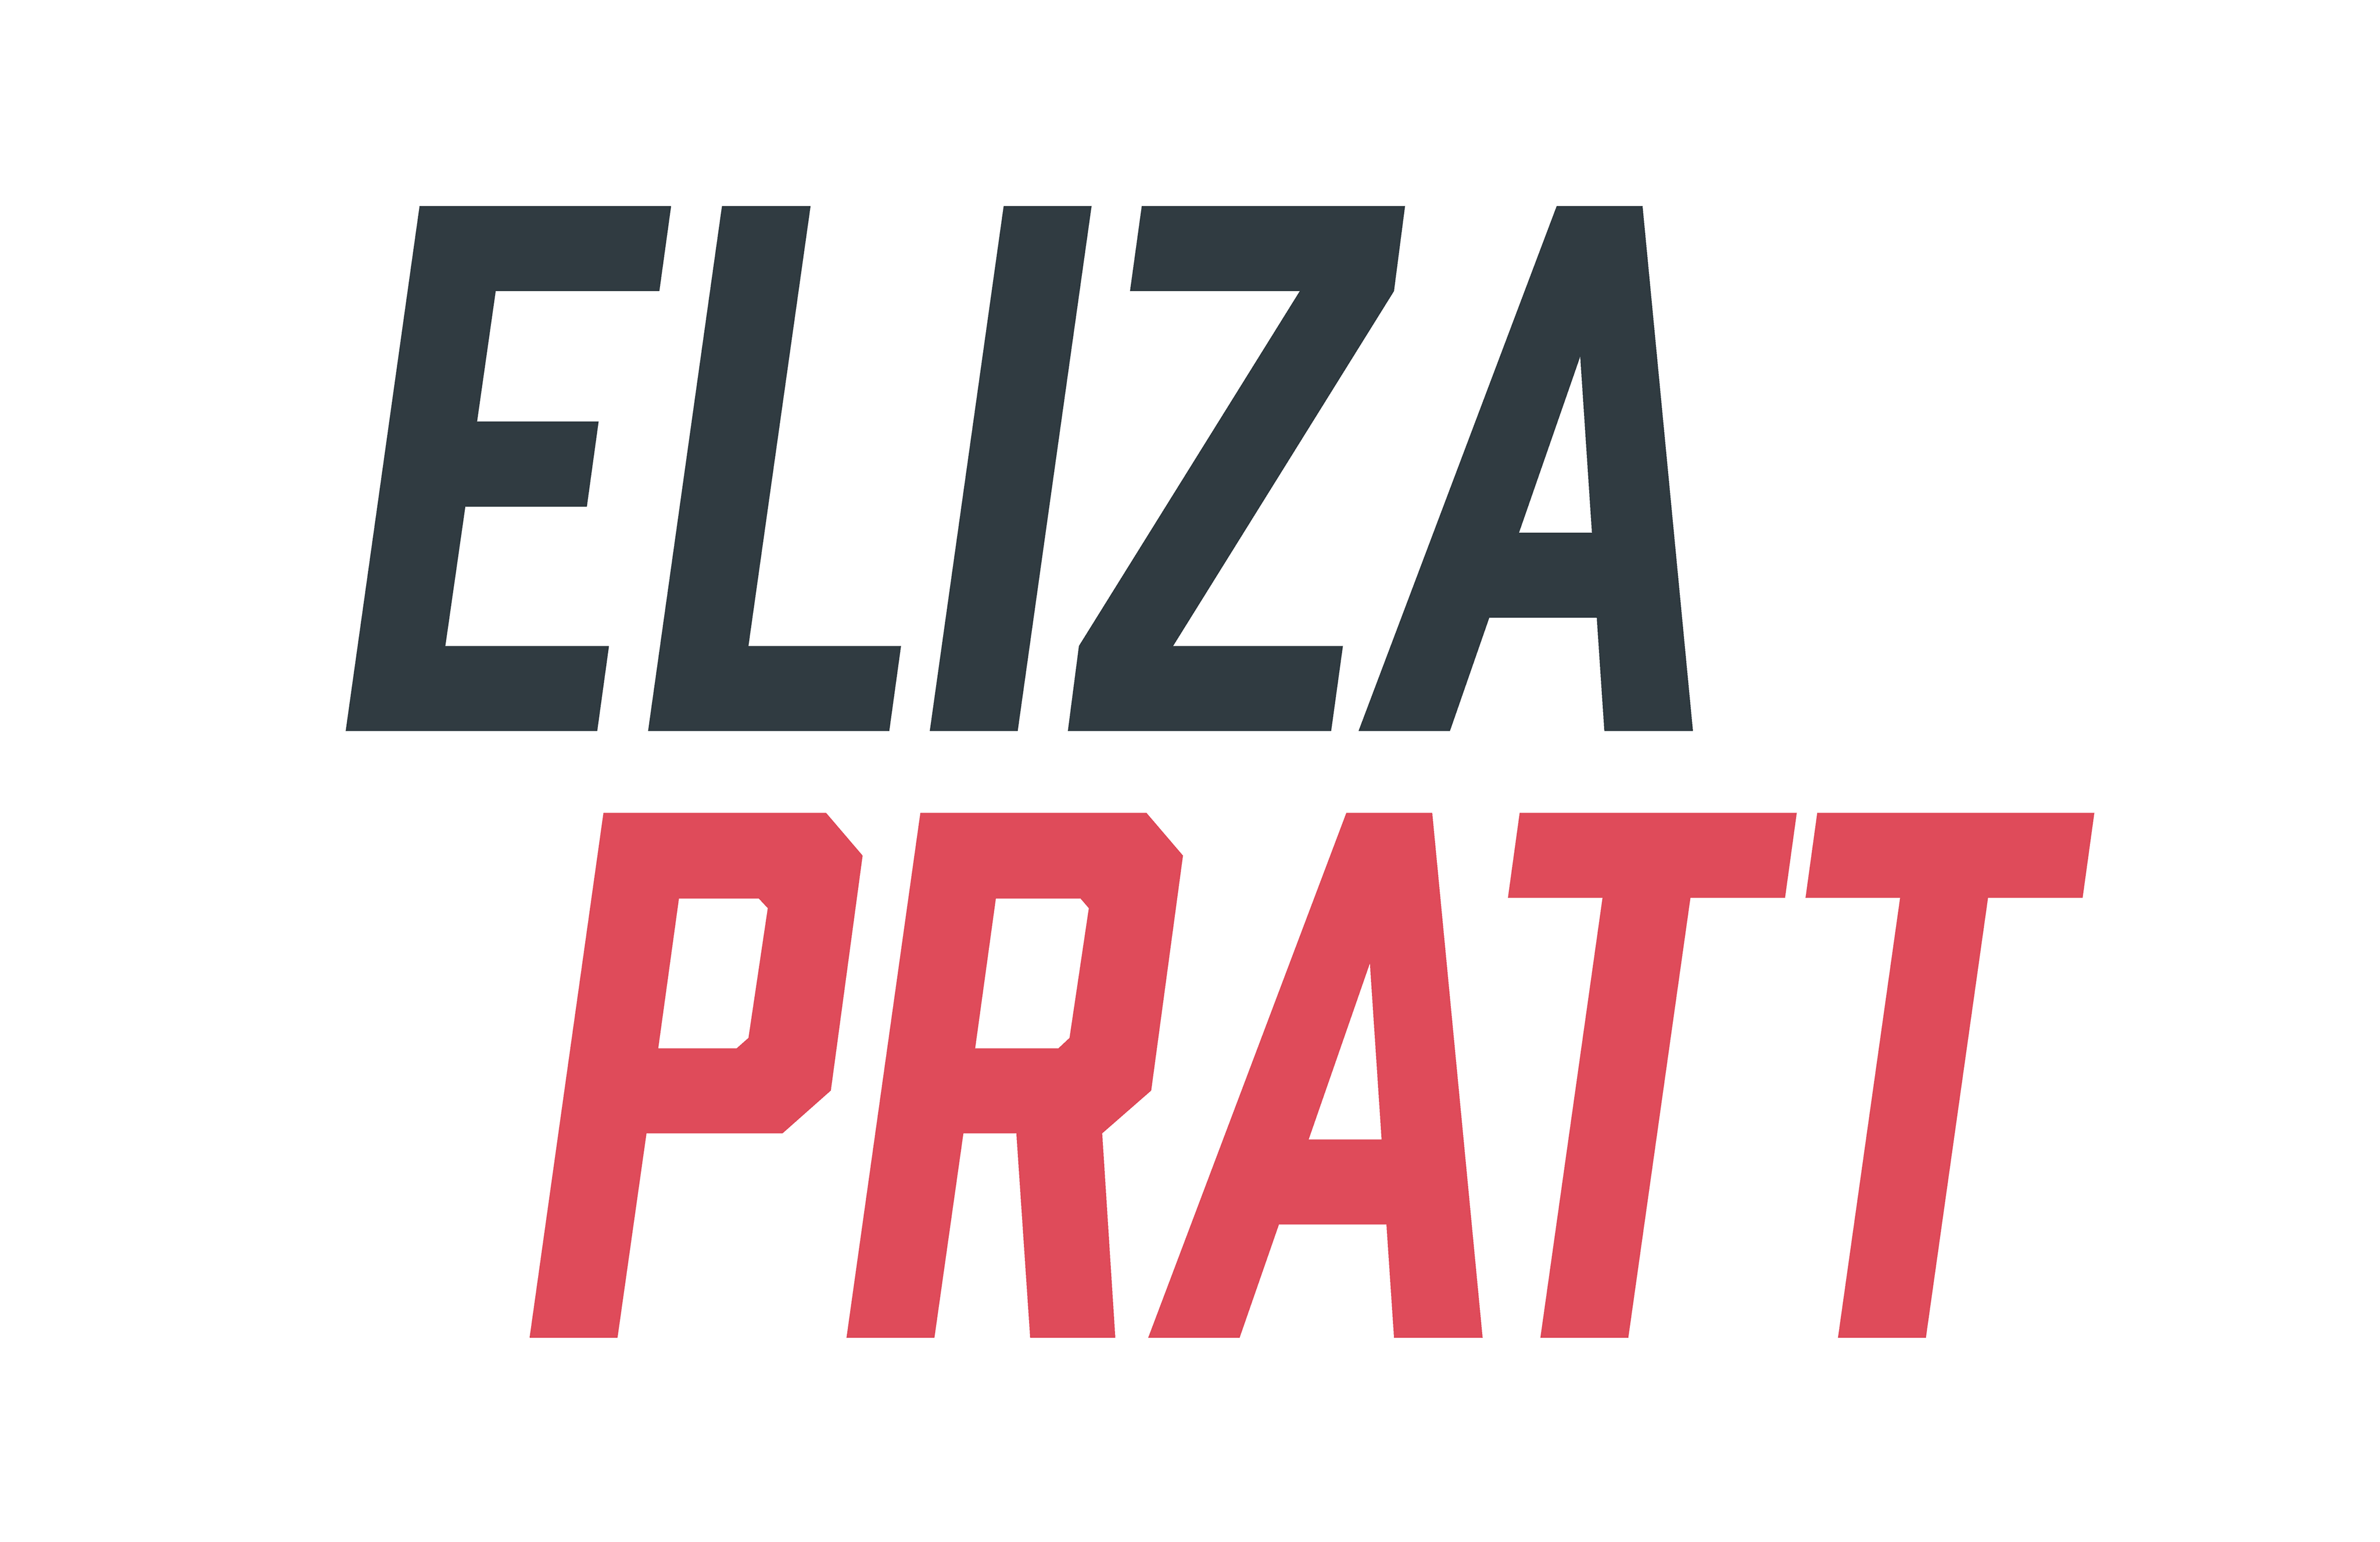 Eliza Pratt